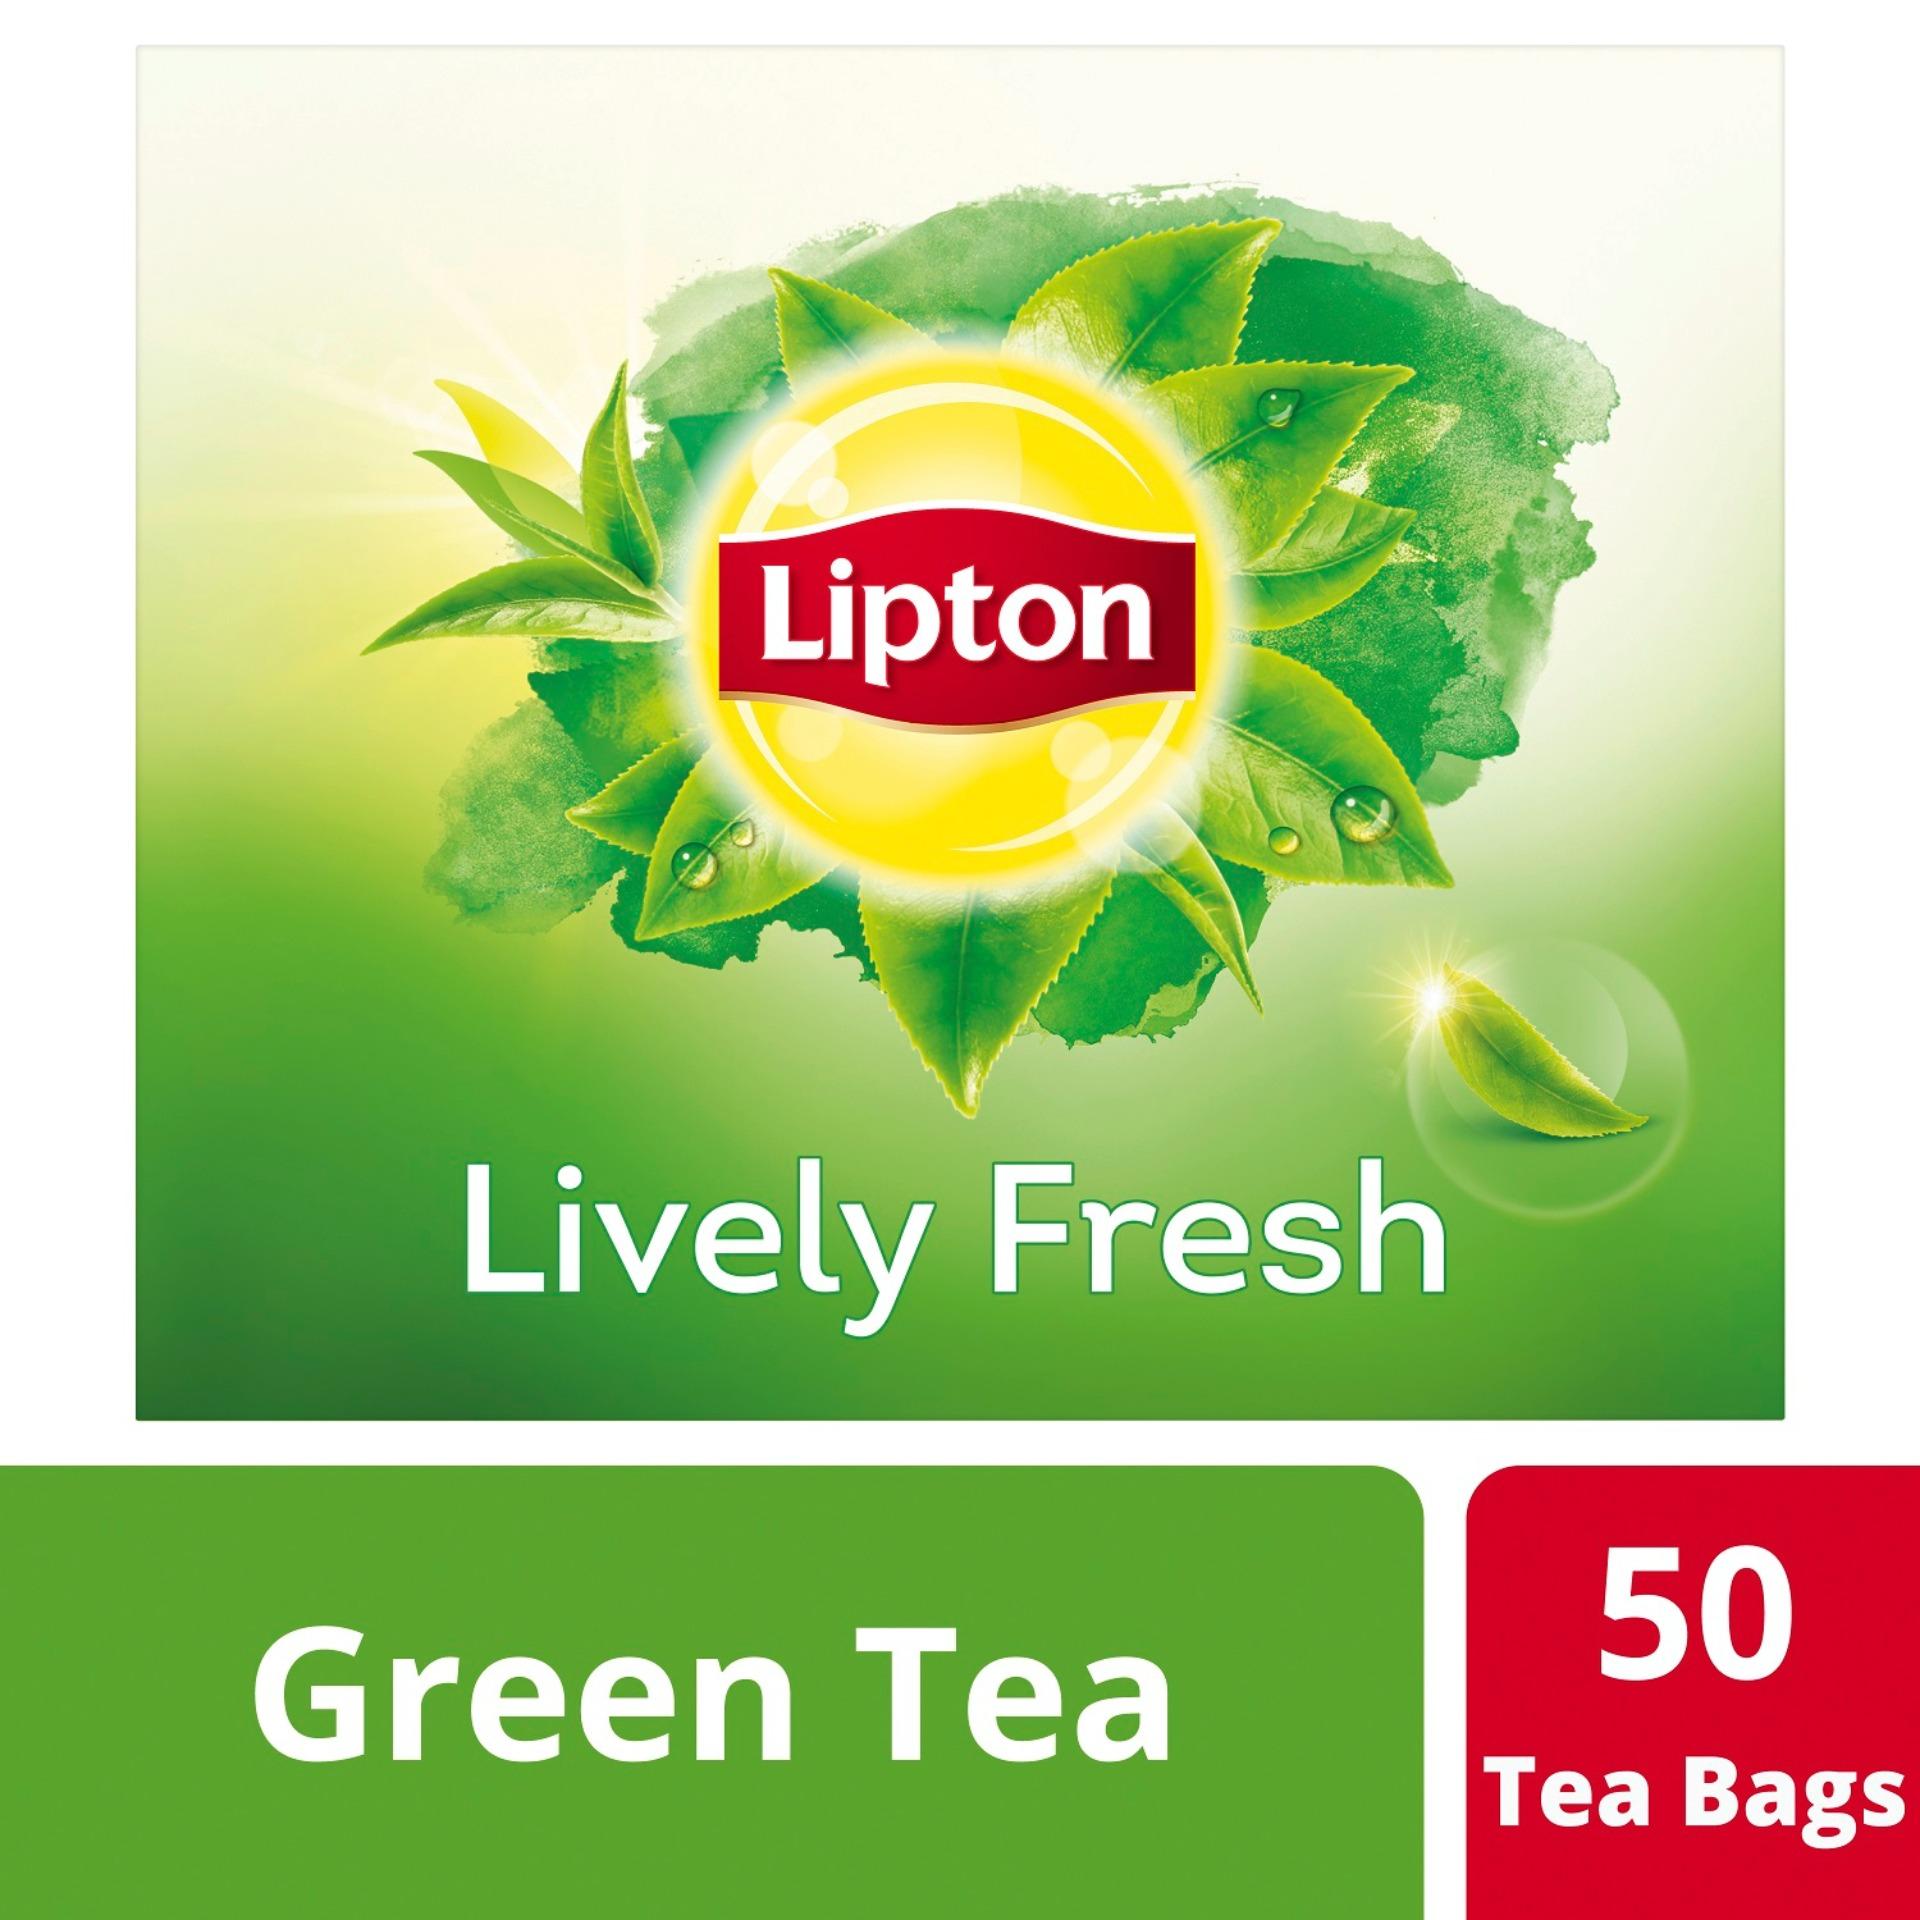 lipton tea bags price